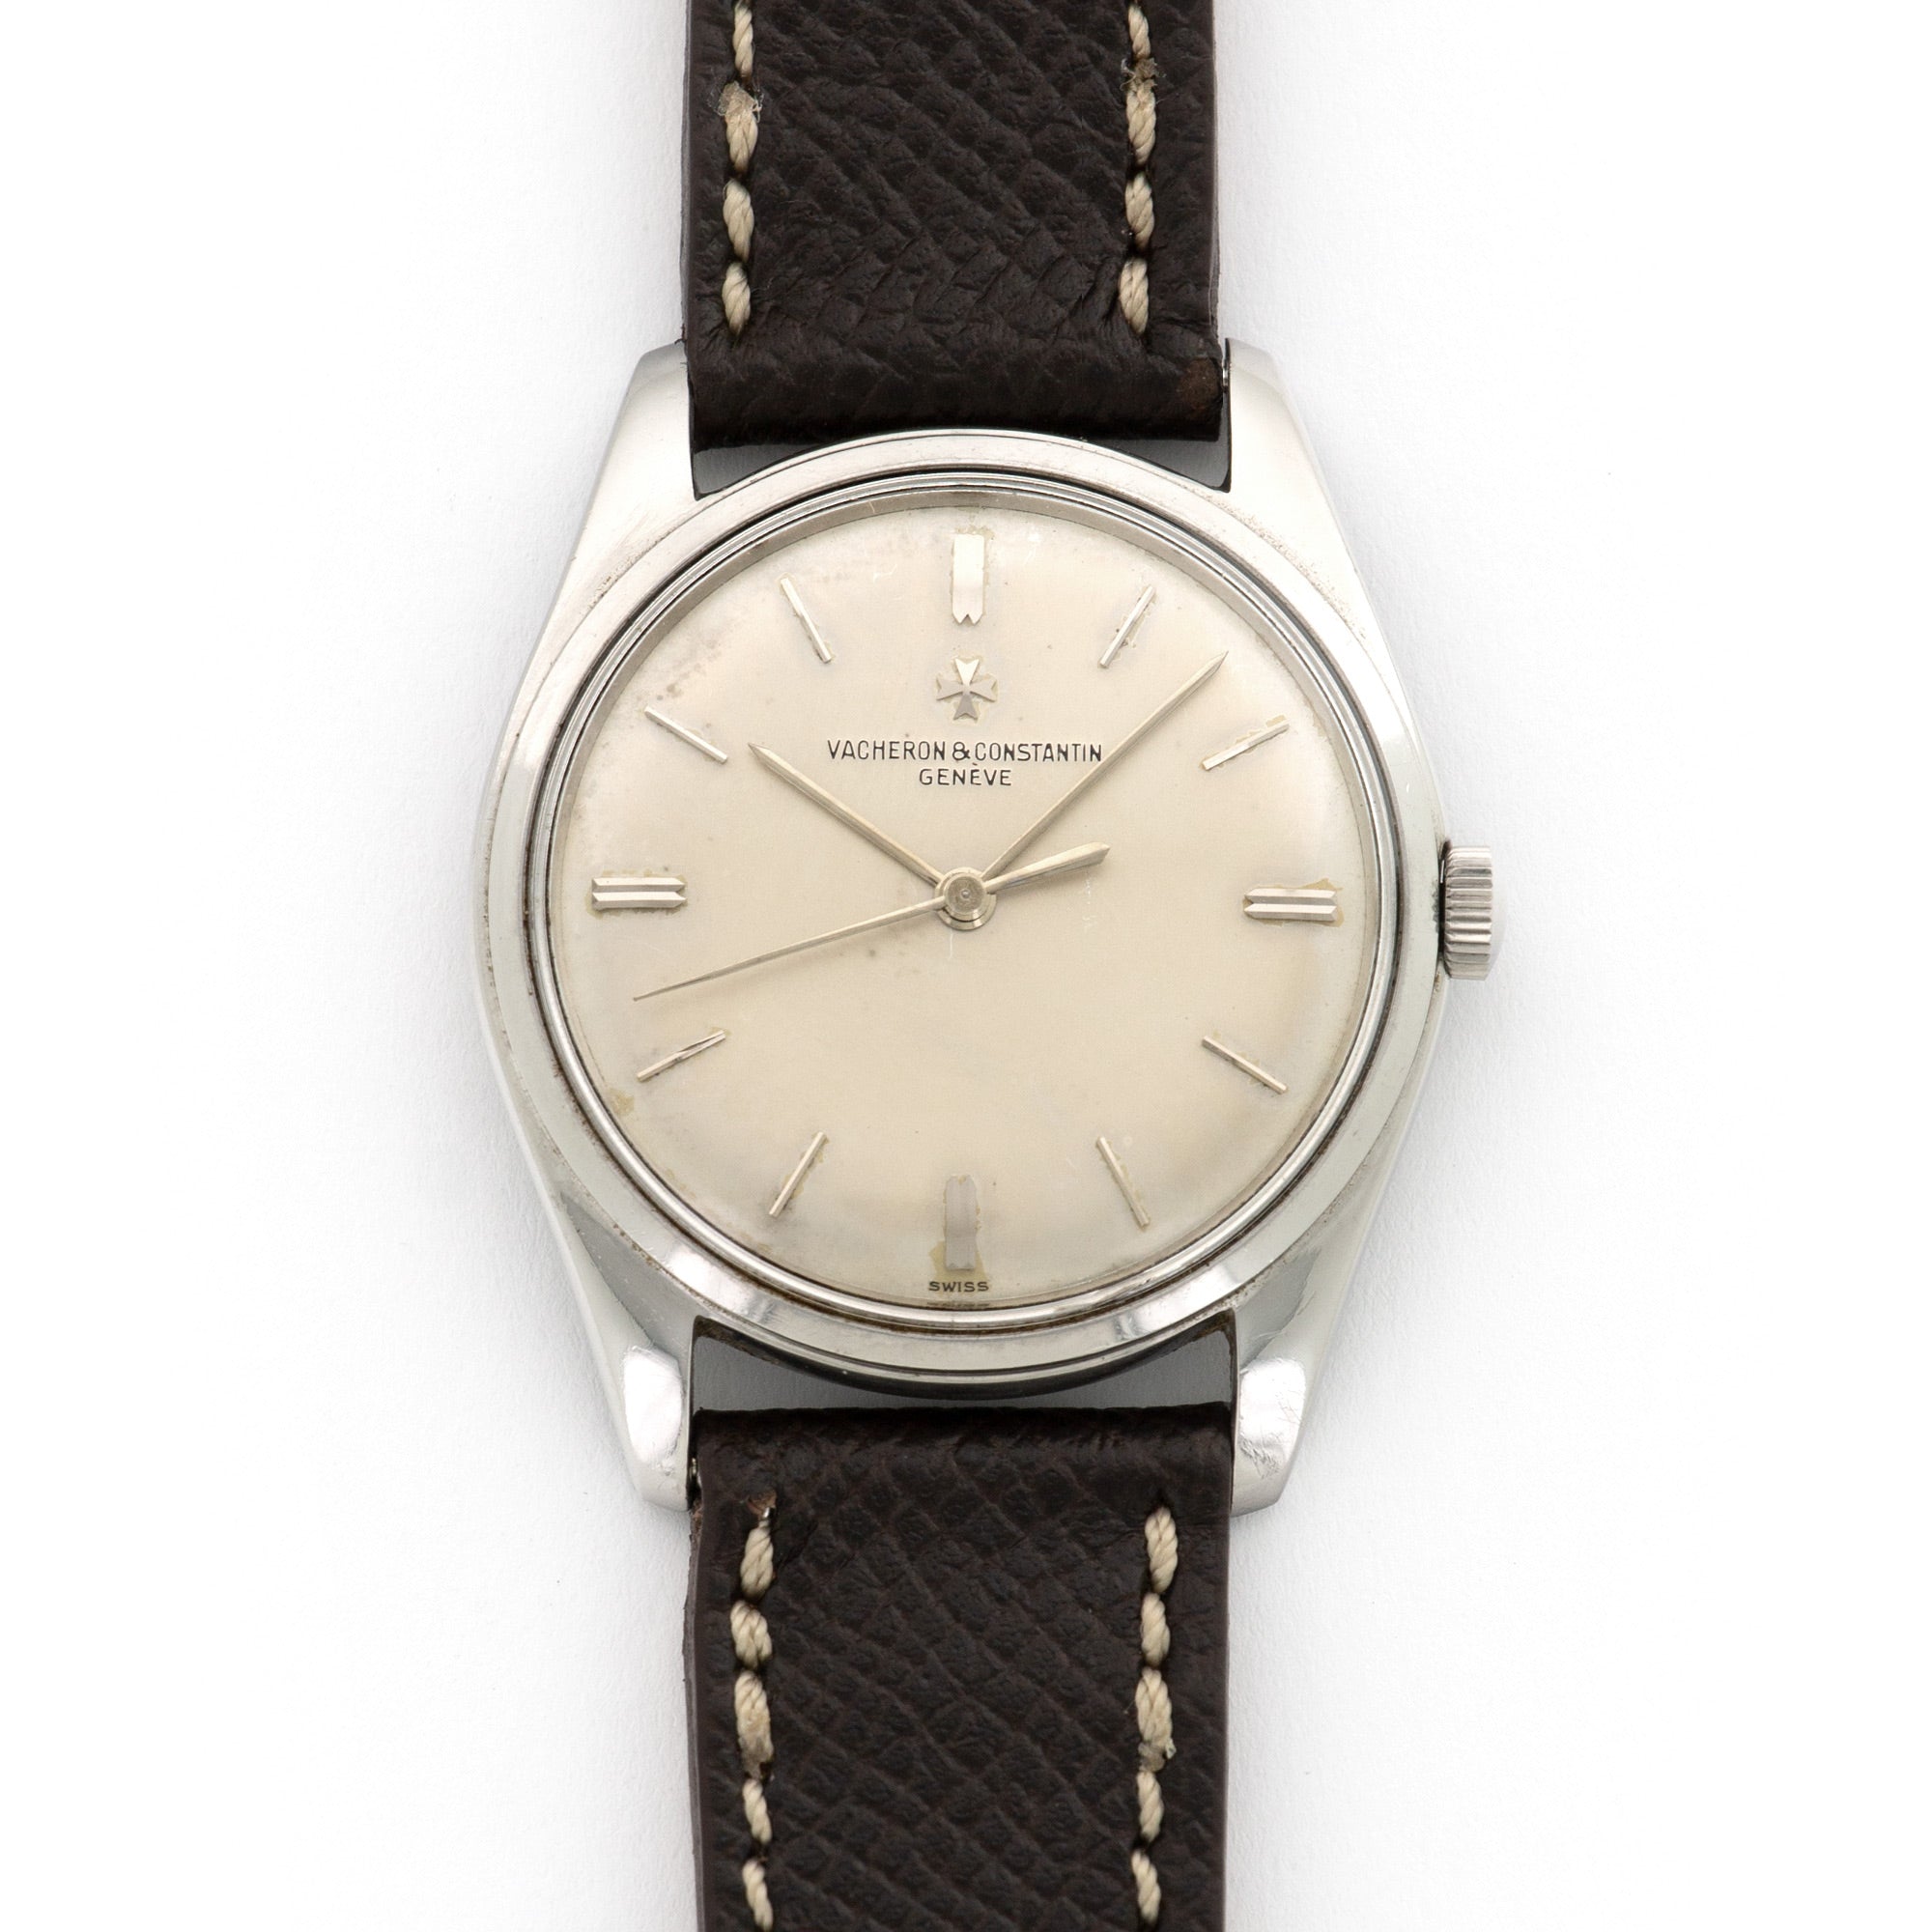 Vacheron Constantin - Vacheron Constantin Stainless Steel Strap Watch - The Keystone Watches